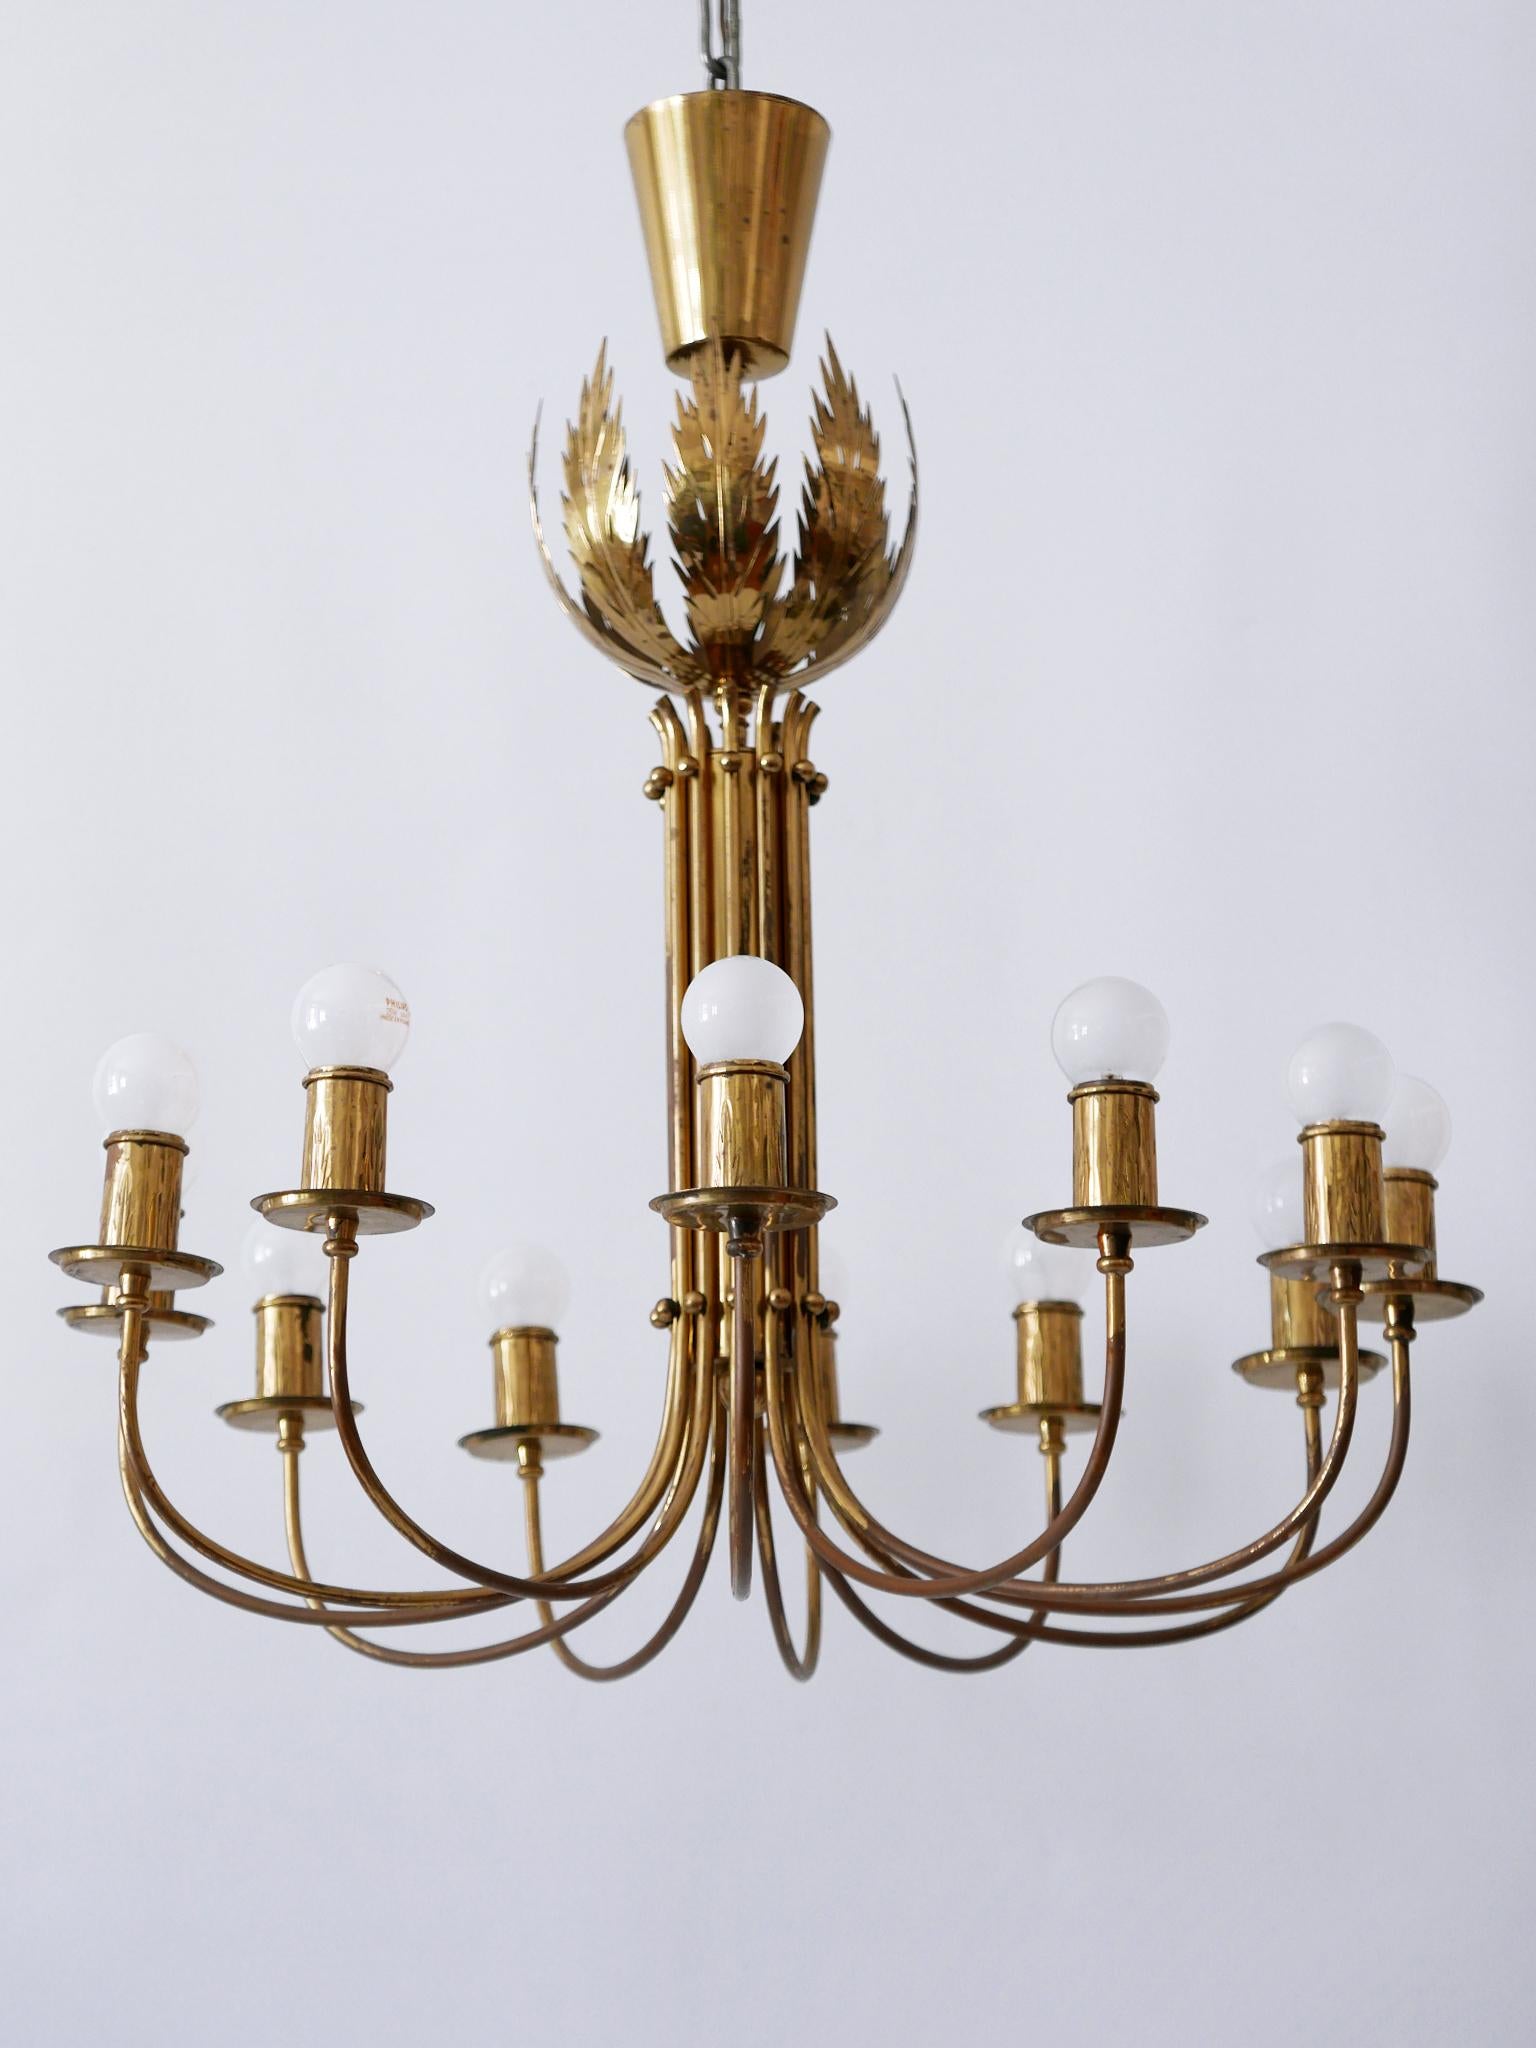 Mid-Century Modern Rare 12-Armed Brass Chandeliers or Pendant Lamps by Vereinigte Werkstätten 1950s For Sale